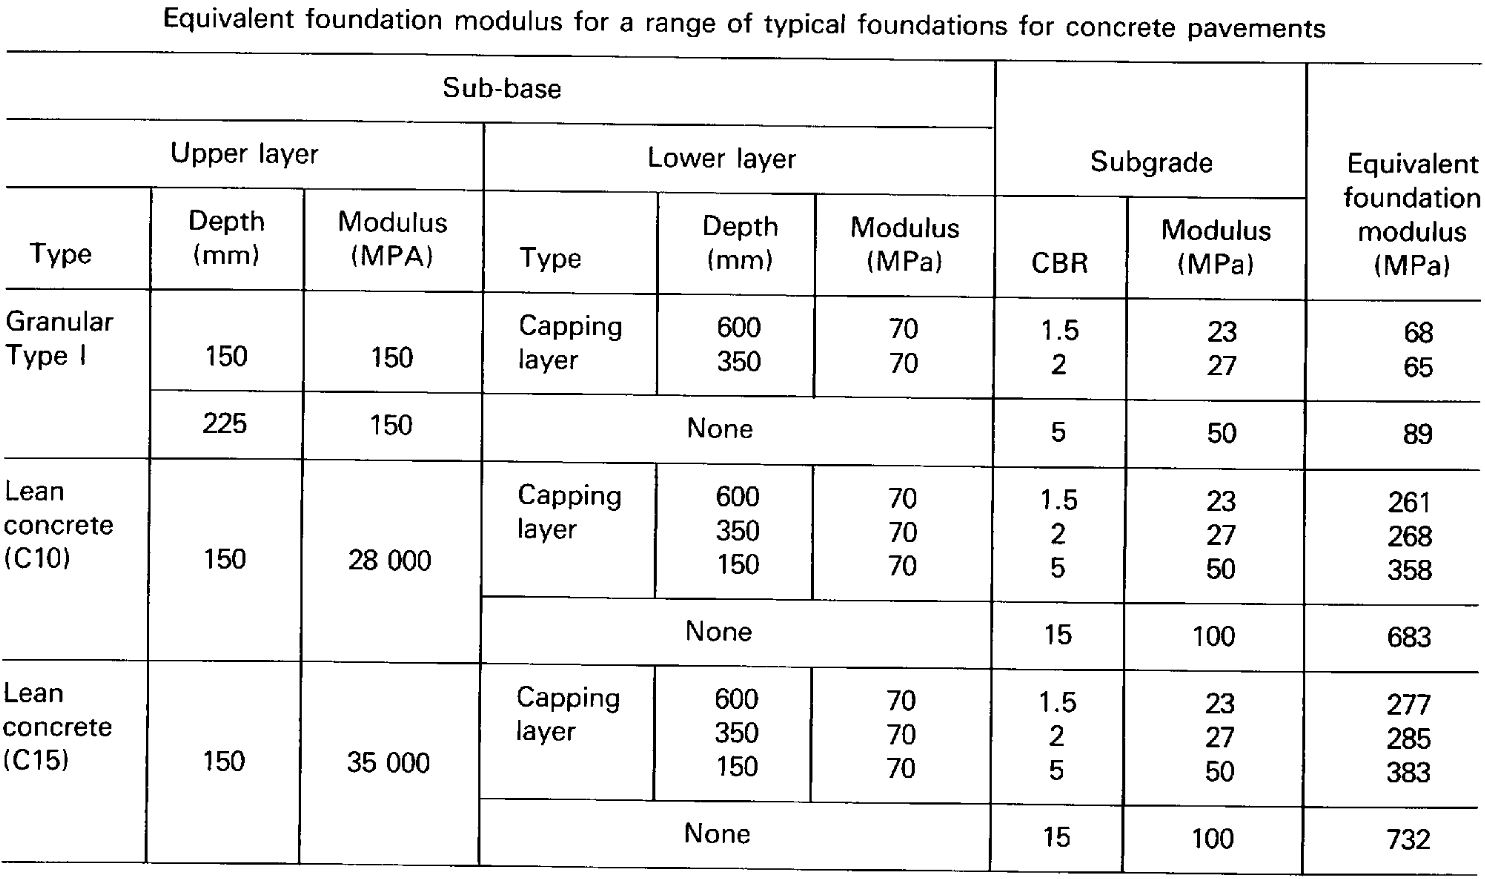 TRRL87 Method - Equivalent Foundation Modulus Table